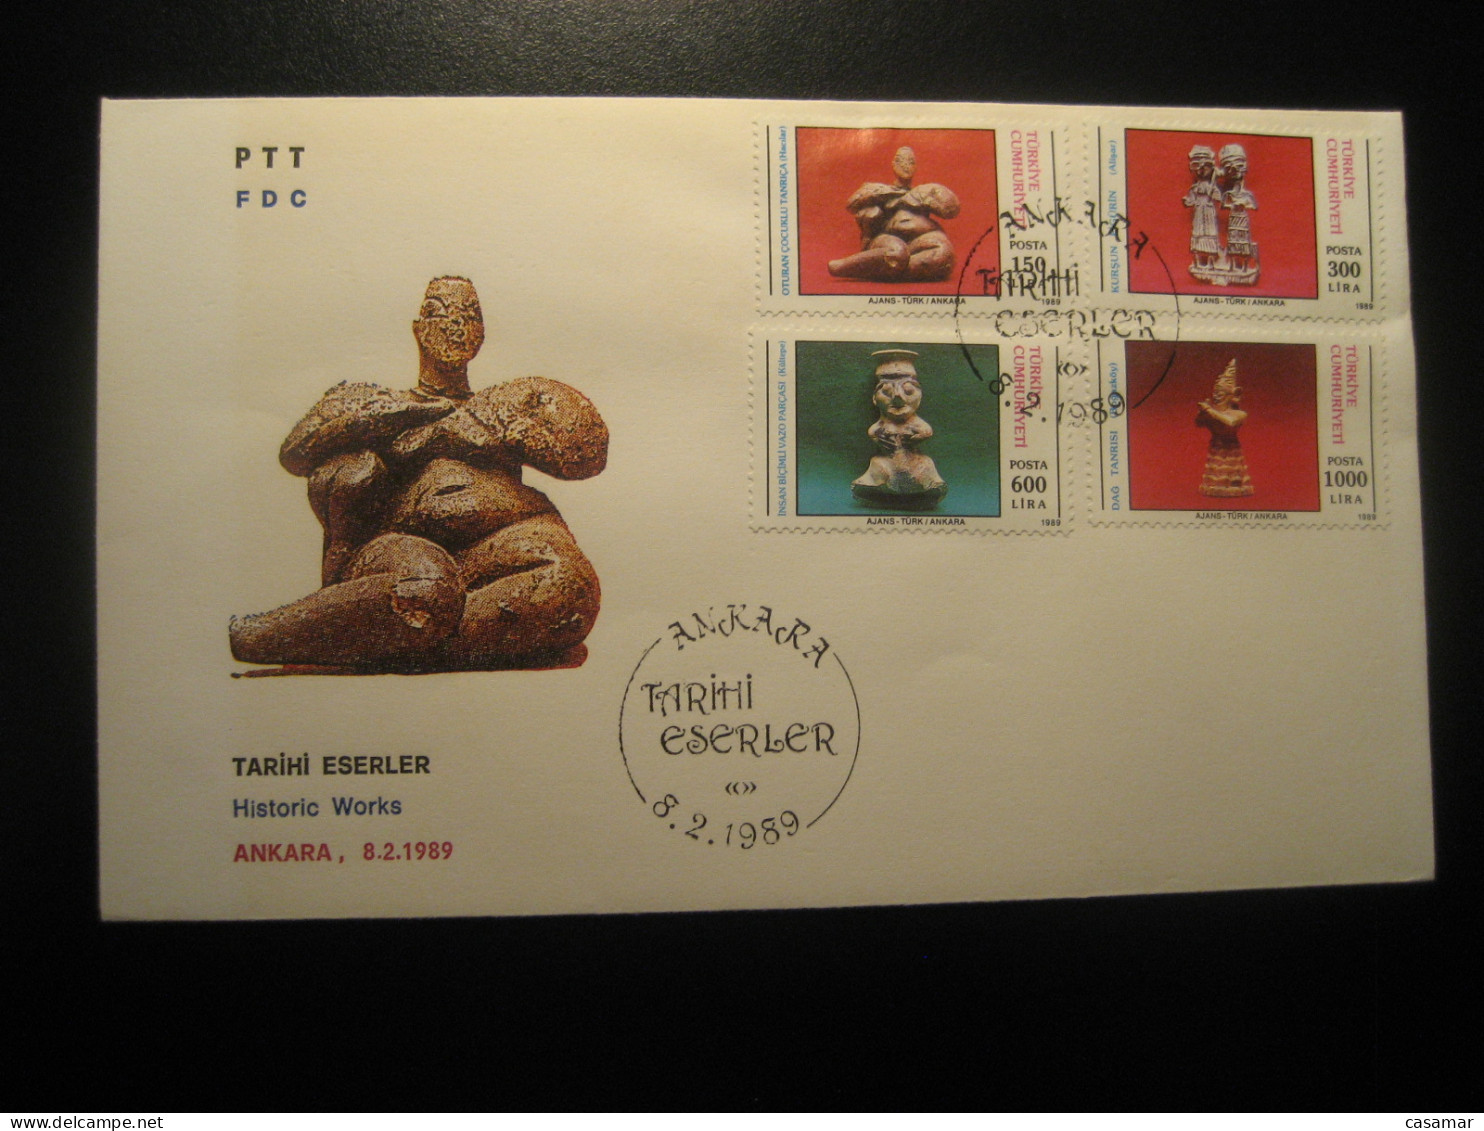 ANKARA 1989 Historic Works FDC Cancel Cover TURKEY - Cartas & Documentos